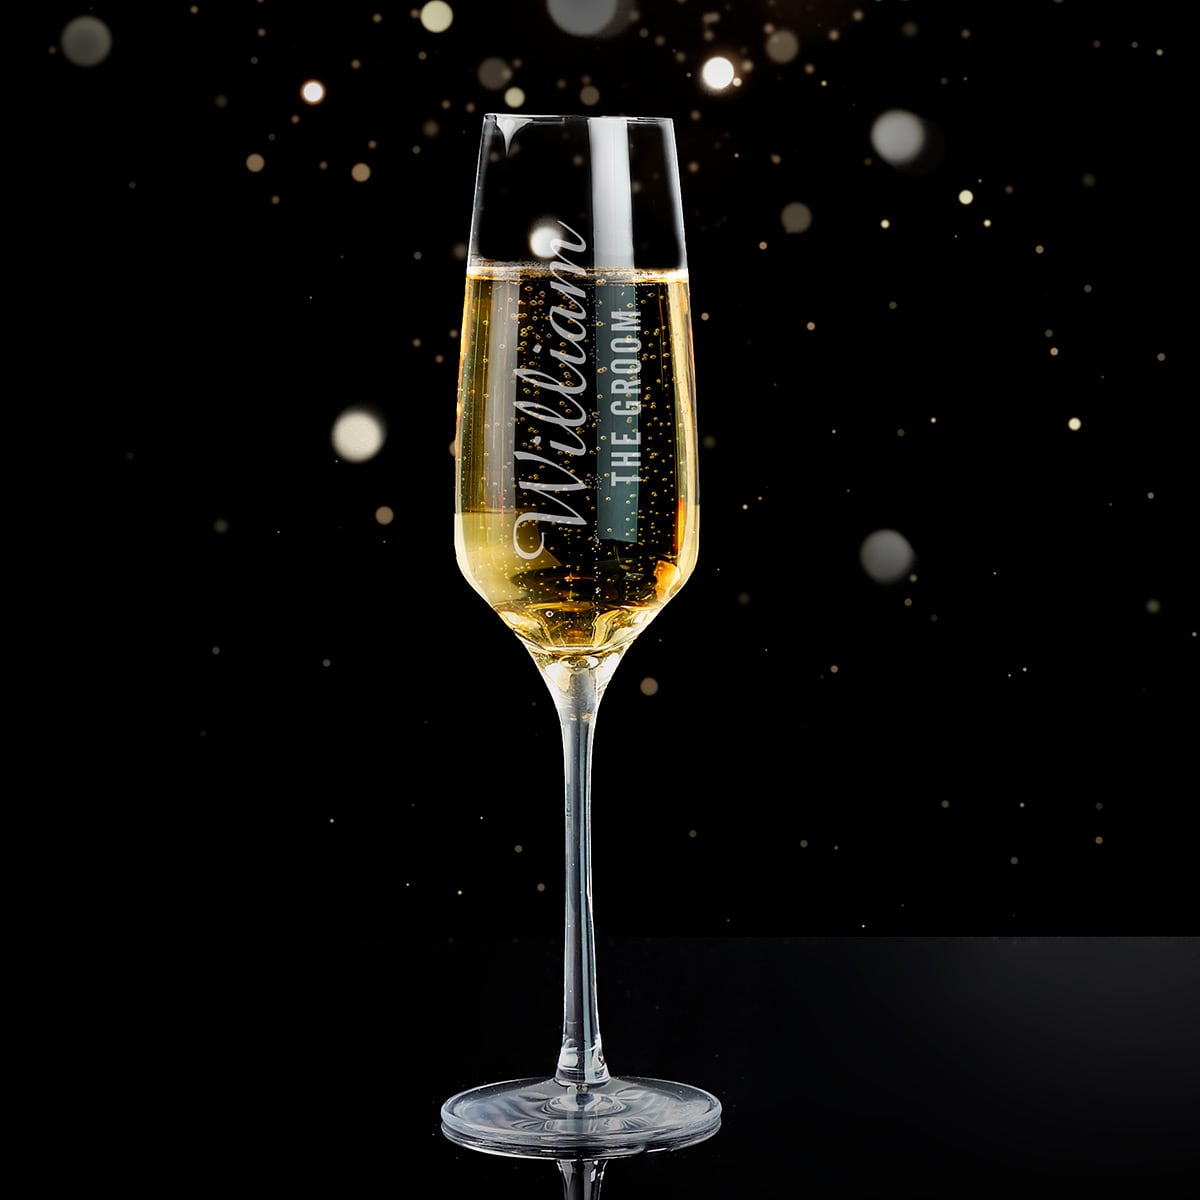 Stolzle Personalized Champagne Flutes - Wedding Champagne Flutes